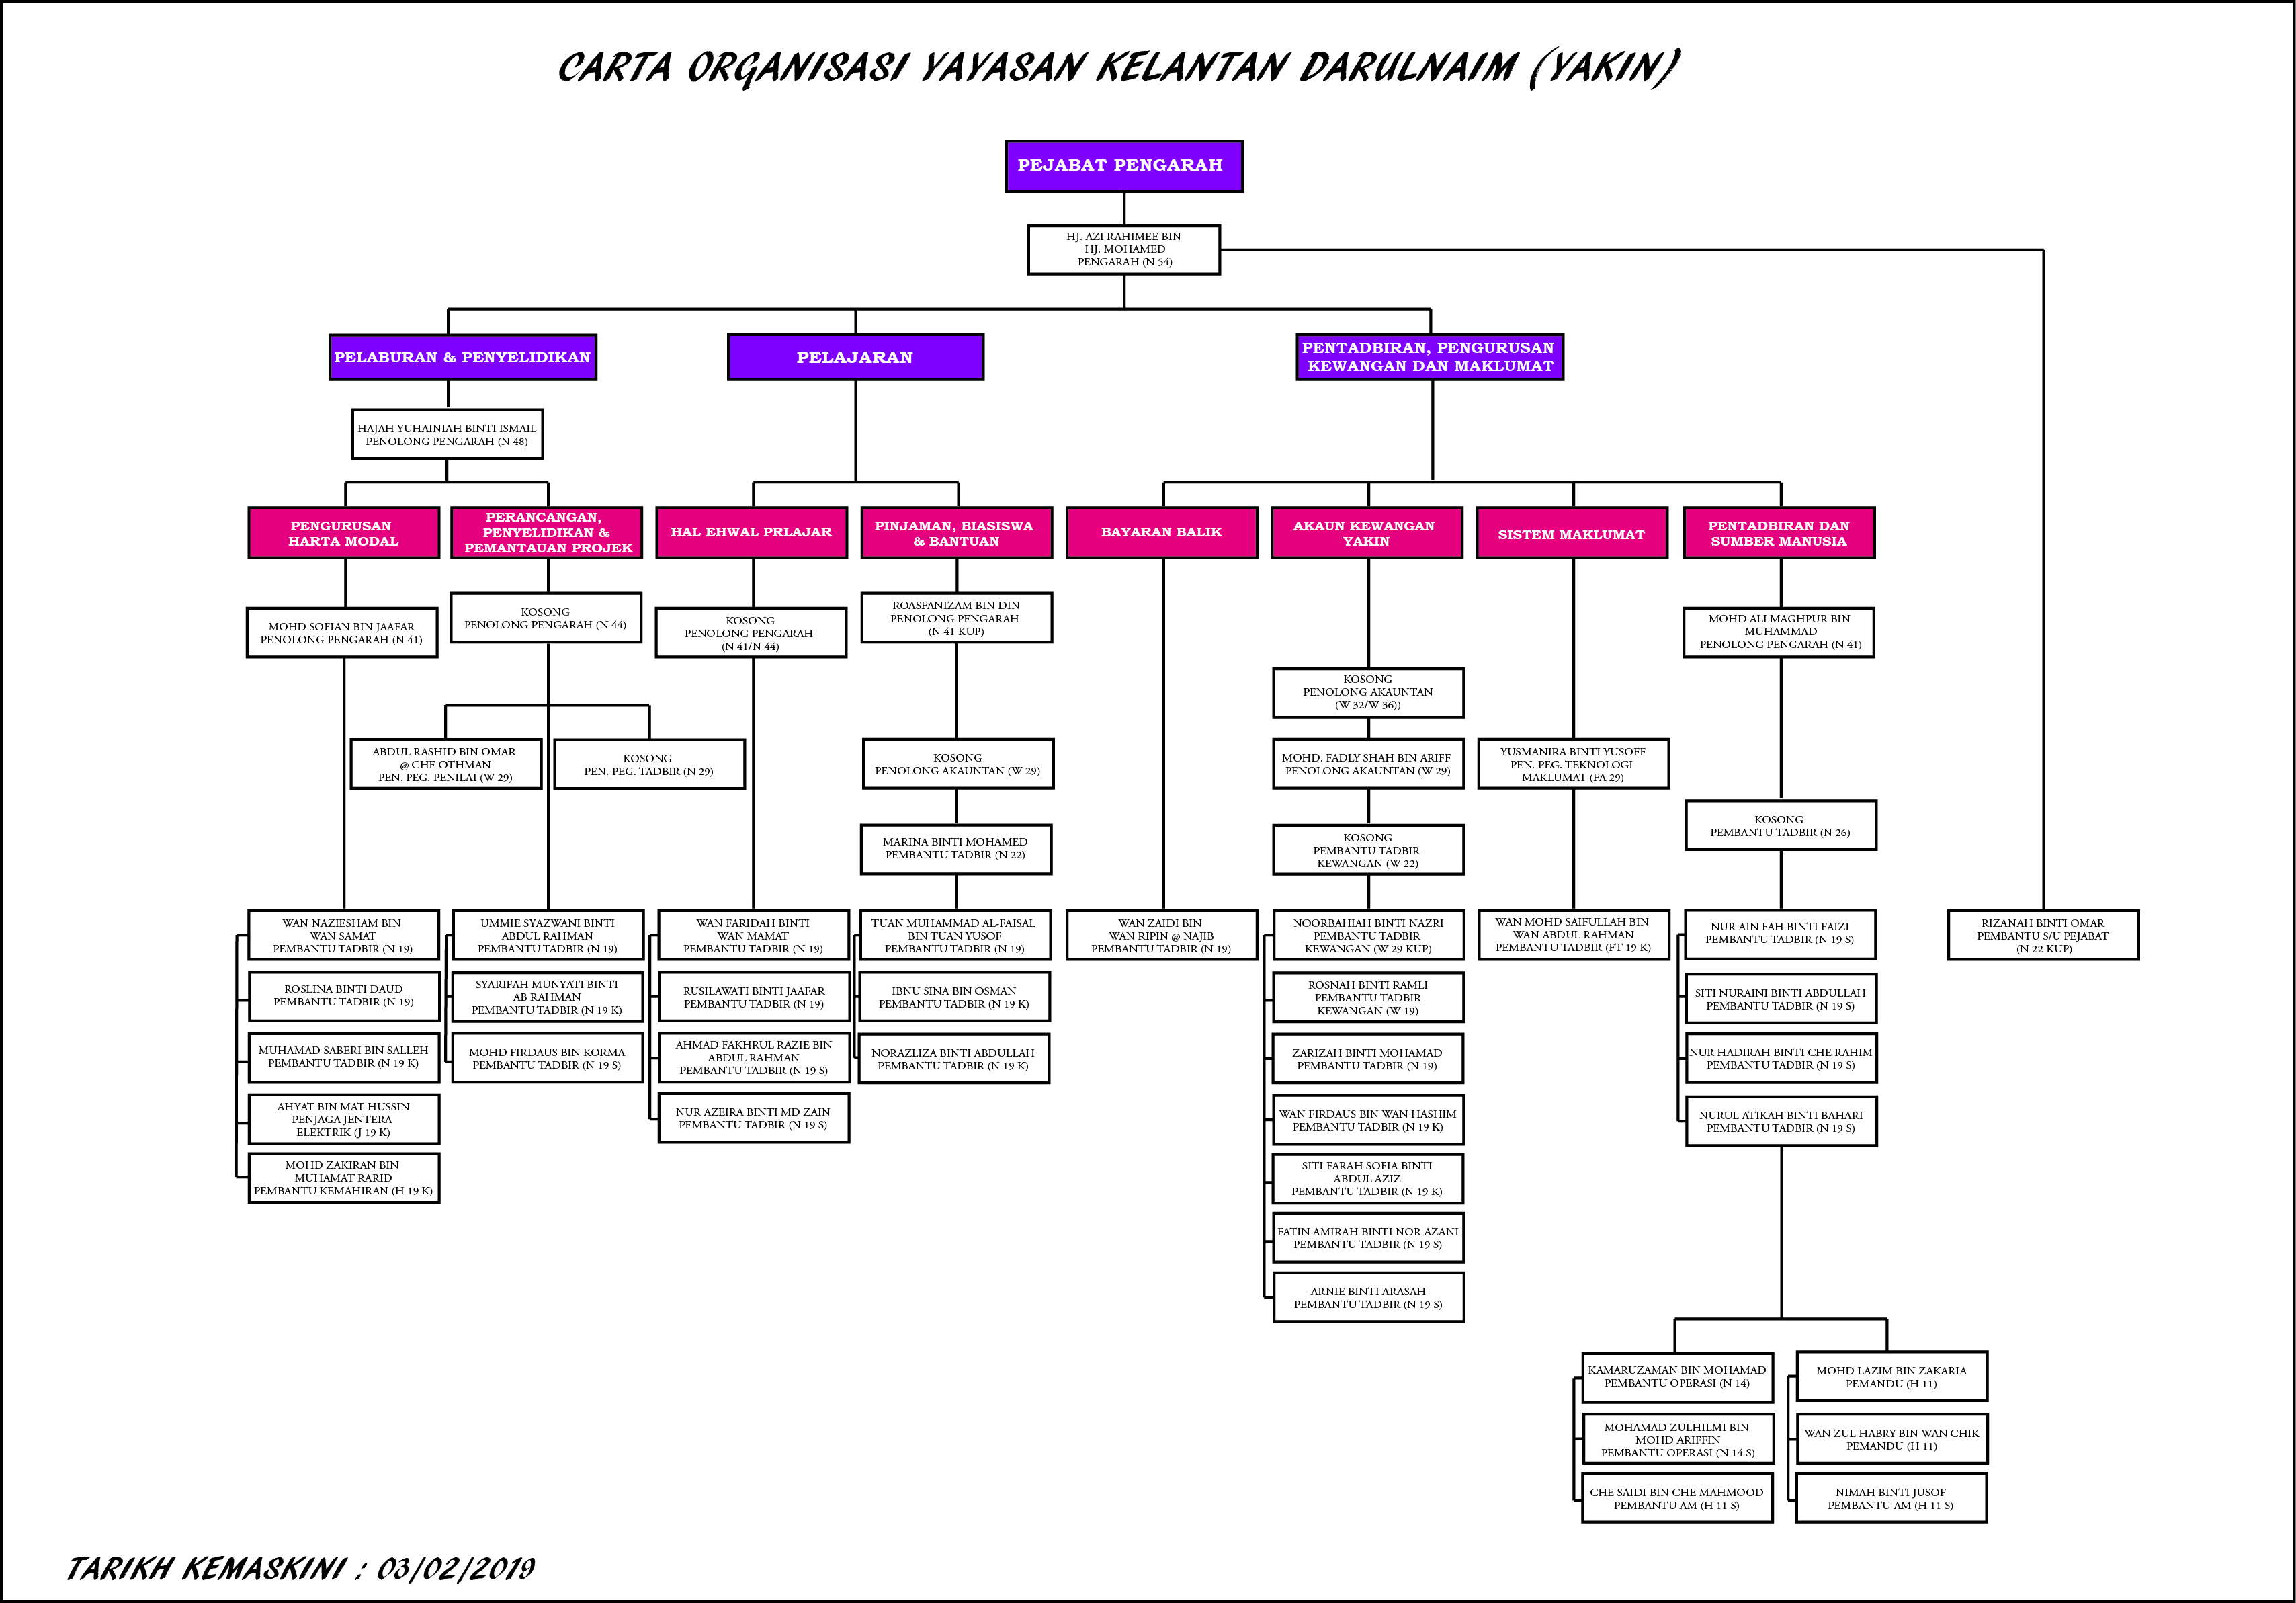 Yayasan Kelantan Darulnaim Carta Organisasi